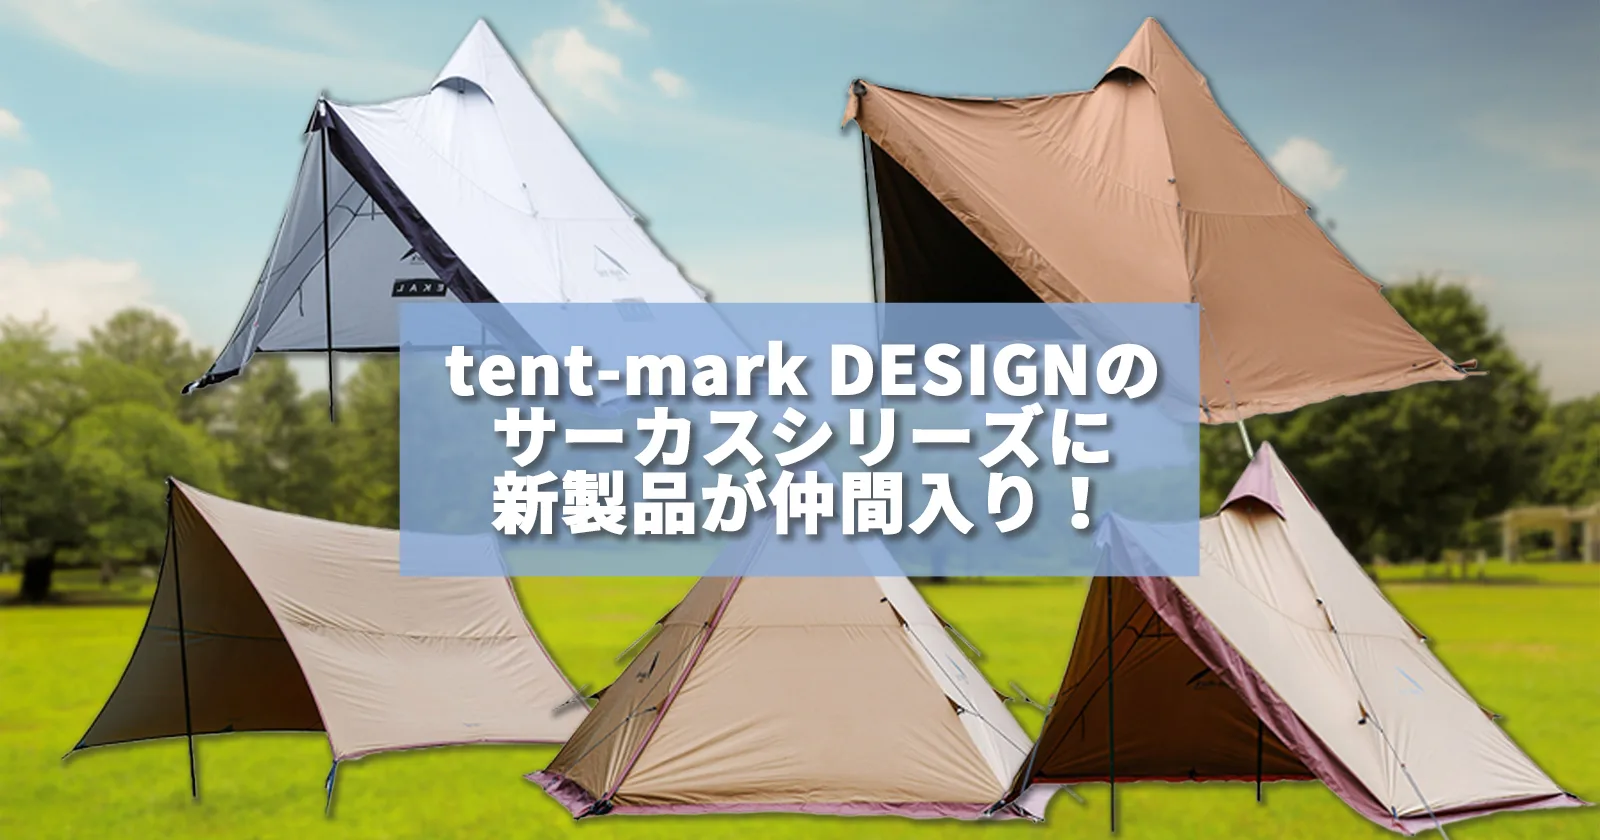 tent-mark DESIGNのサーカスシリーズに新製品が仲間入り！初心者に